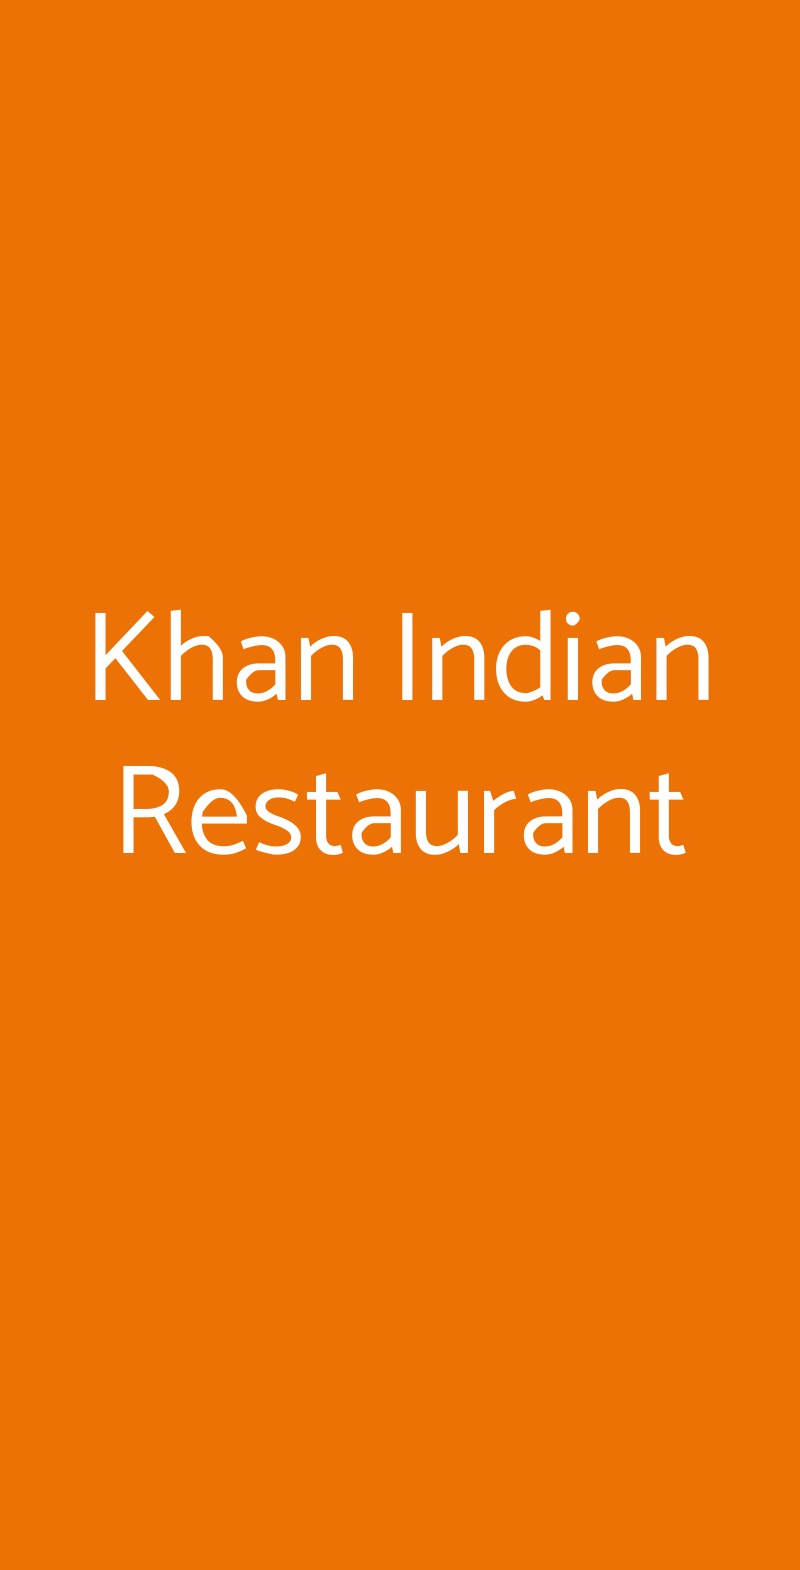 Khan Indian Restaurant Roma menù 1 pagina